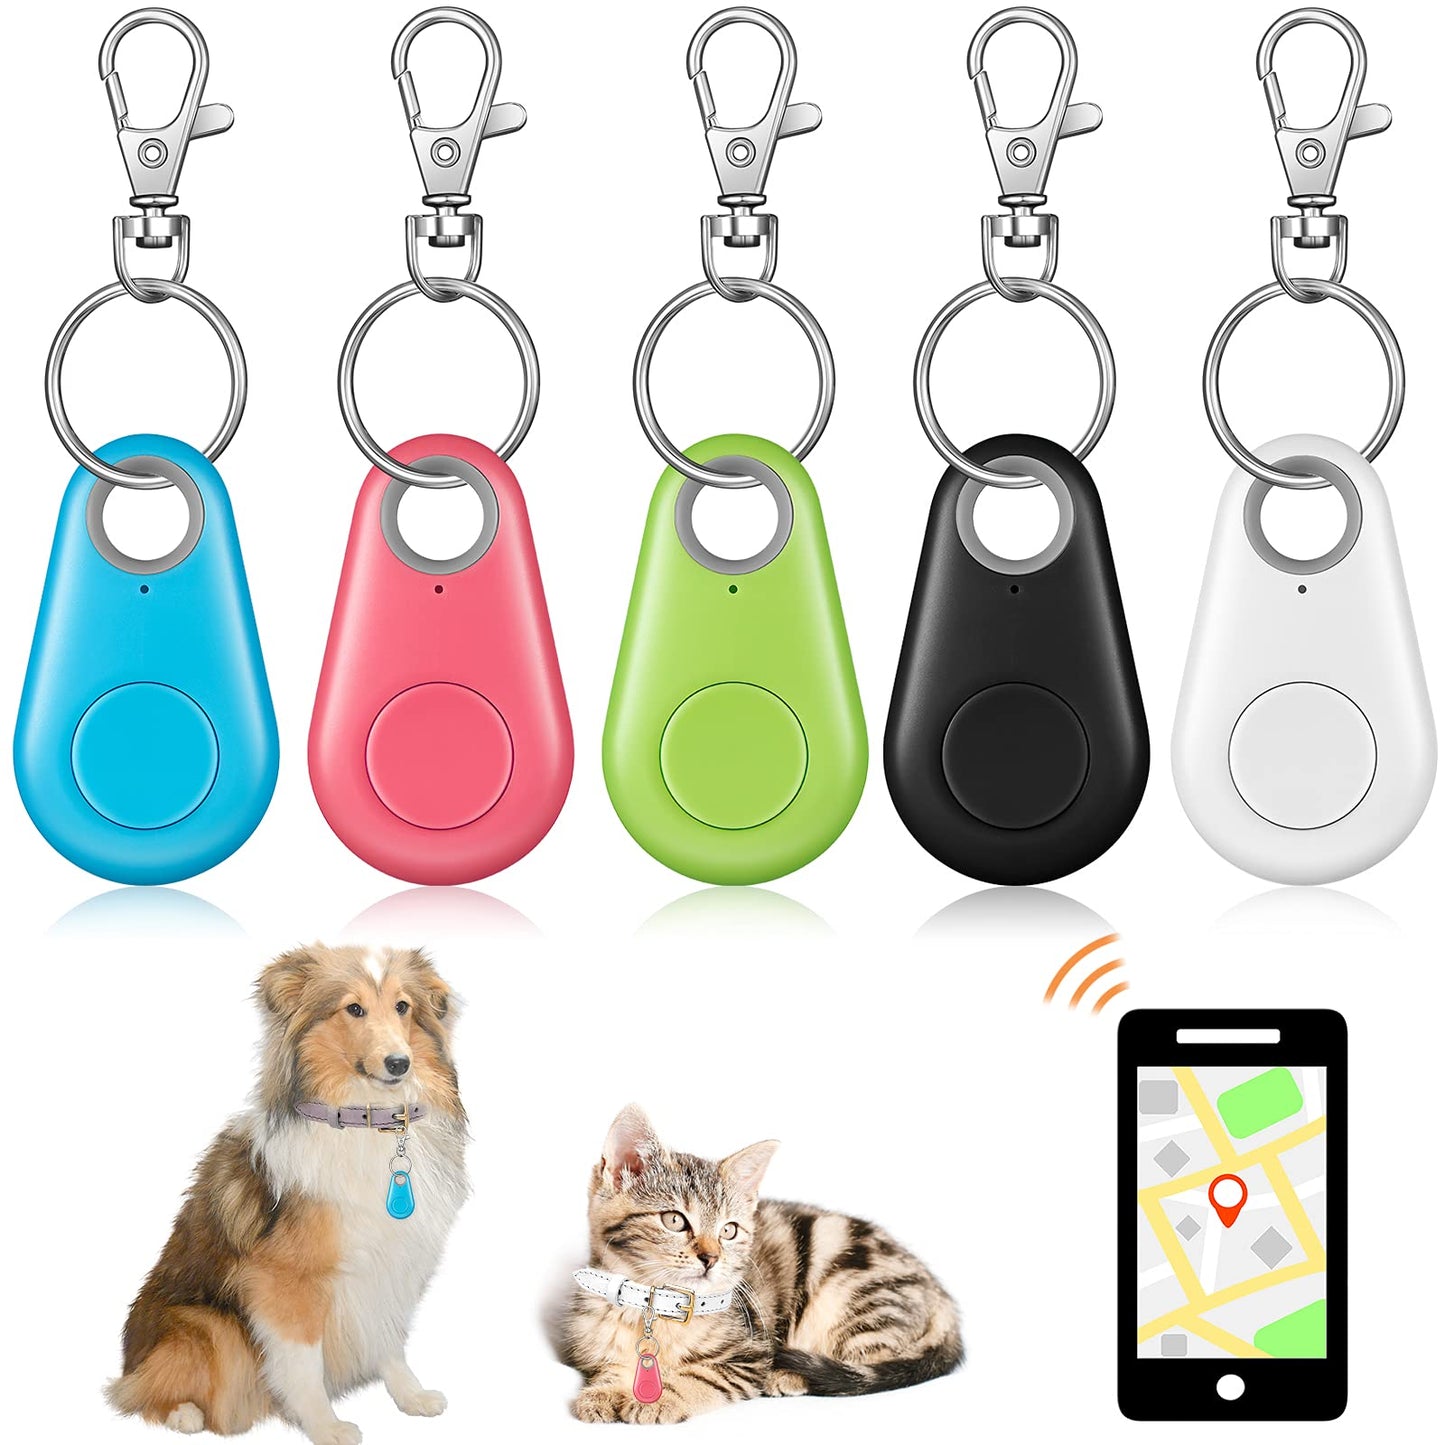 Wireless Bluetooth Pet Tracker